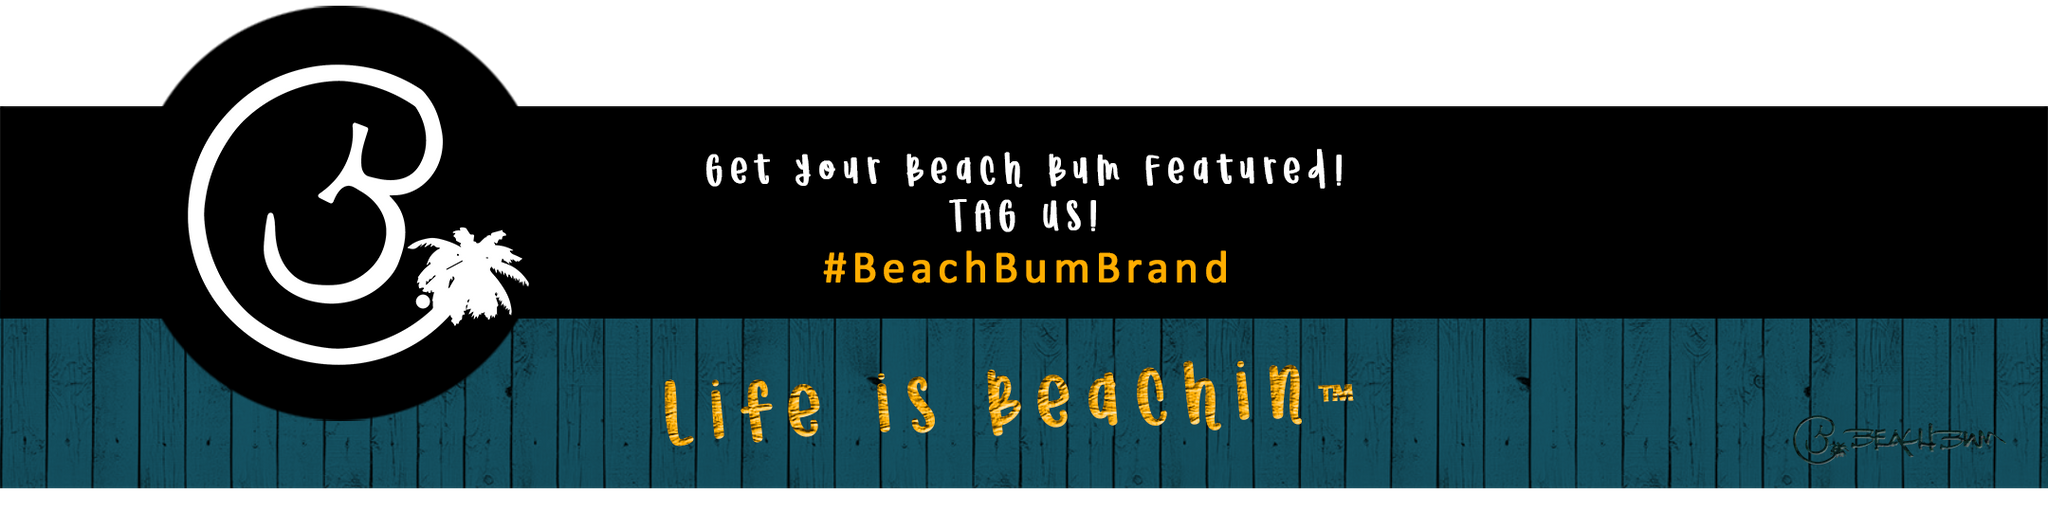 Beach Bum Brand Instagram